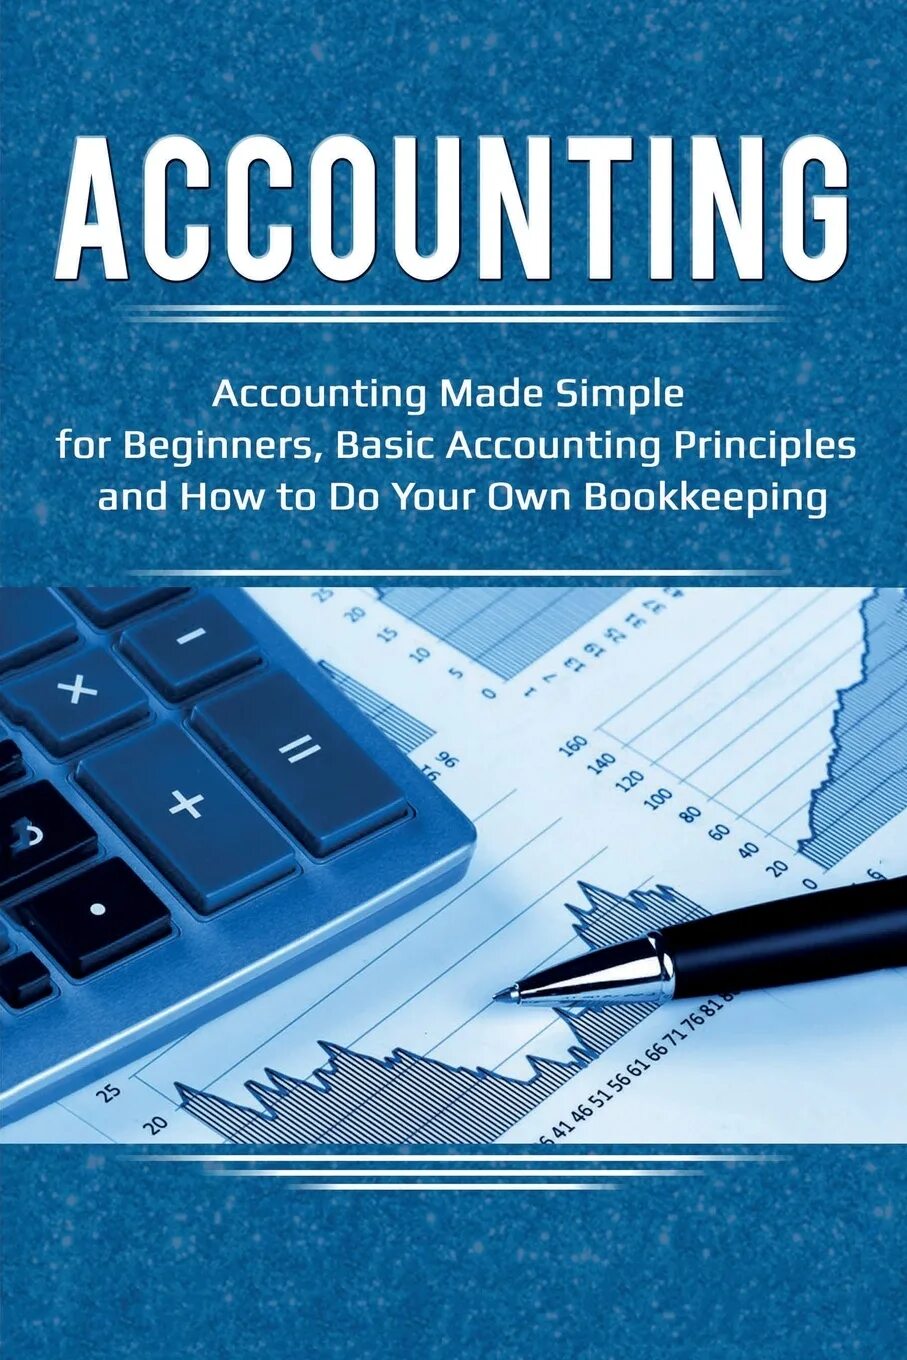 Accounting book. Bookkeeping & Accounting book. Financial Accounting books. Account book. Бухгалтерская отчетность картинки.